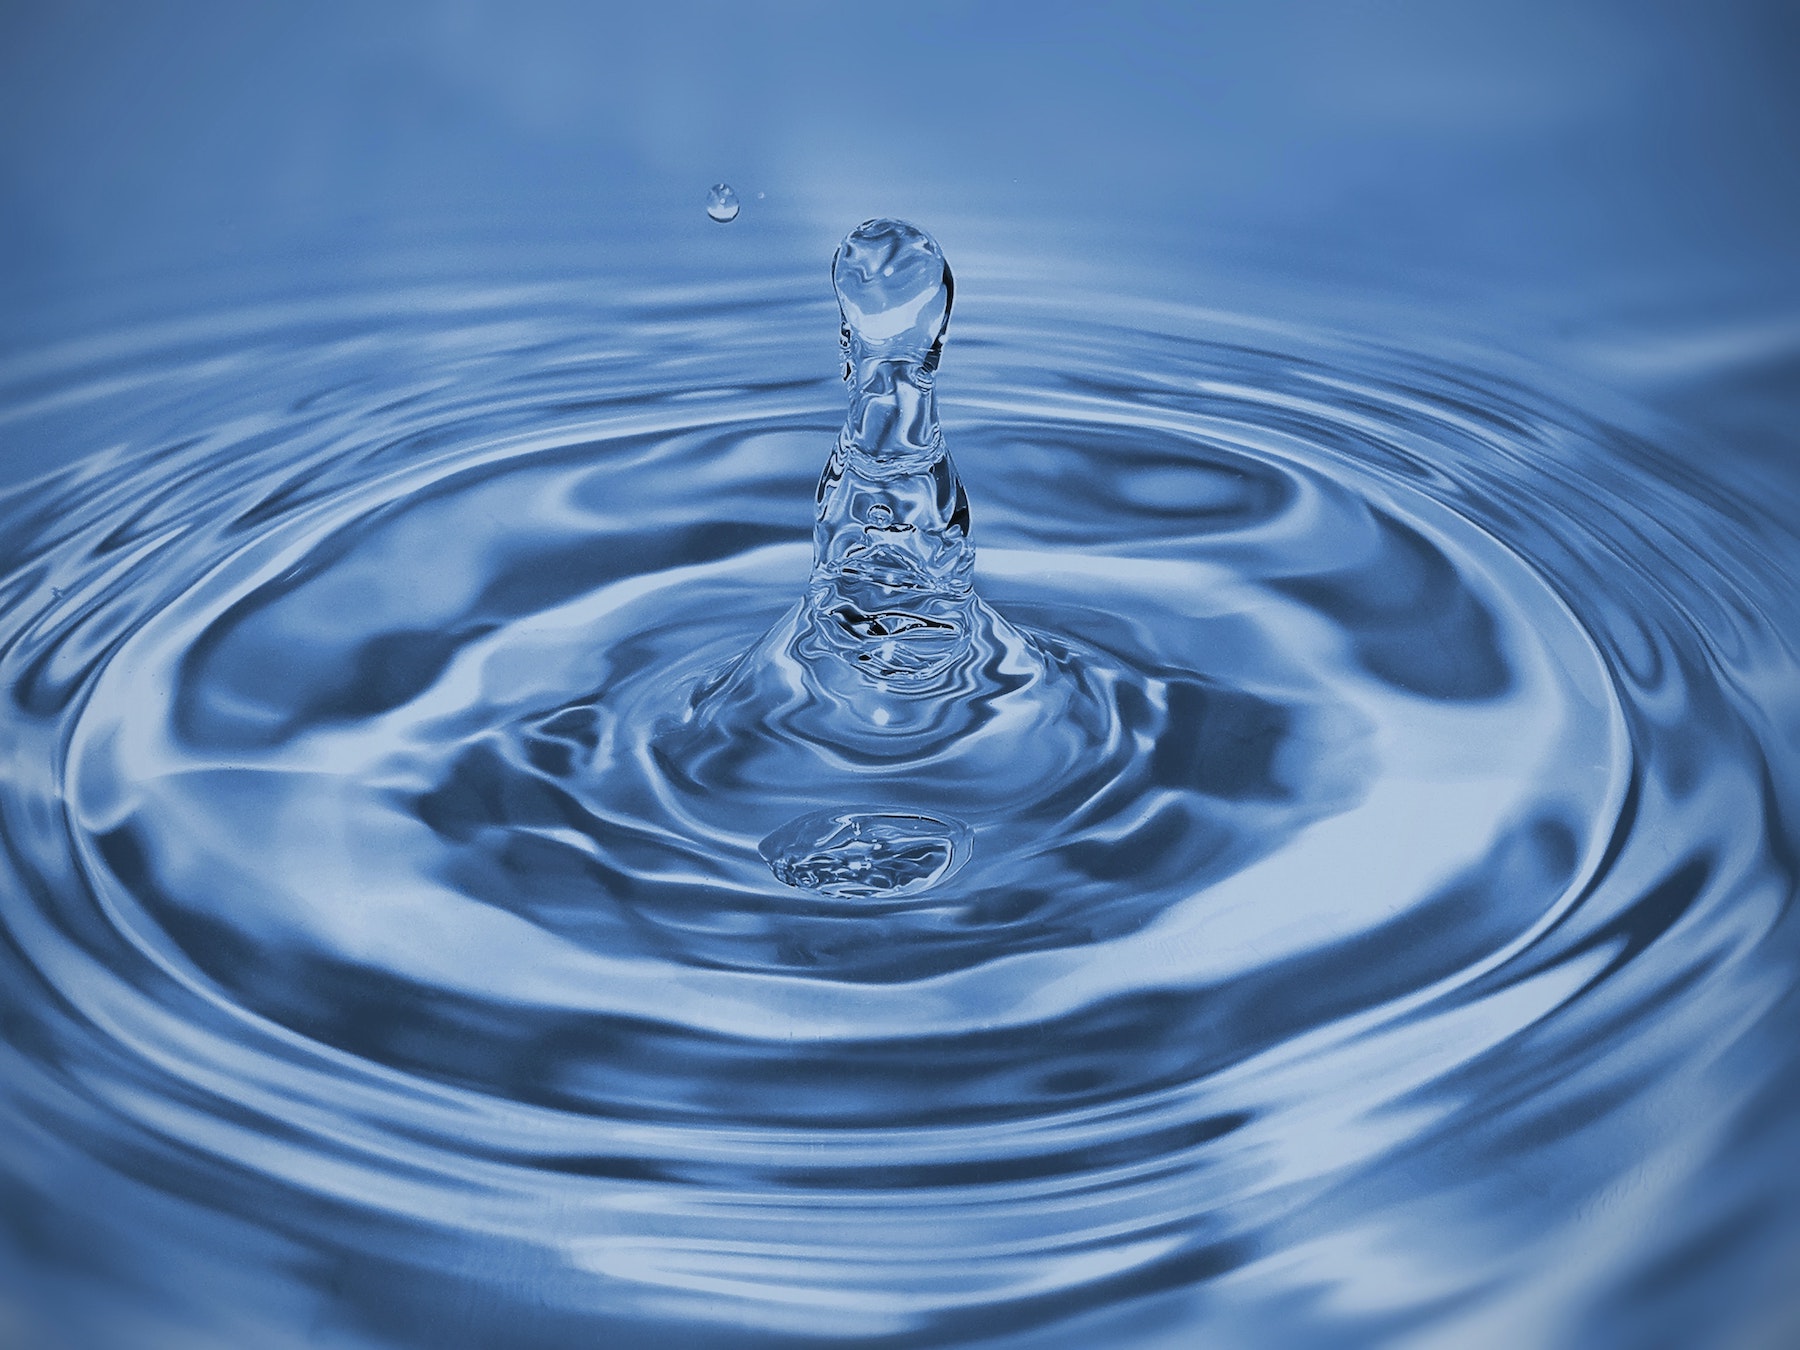 Water treatment splash